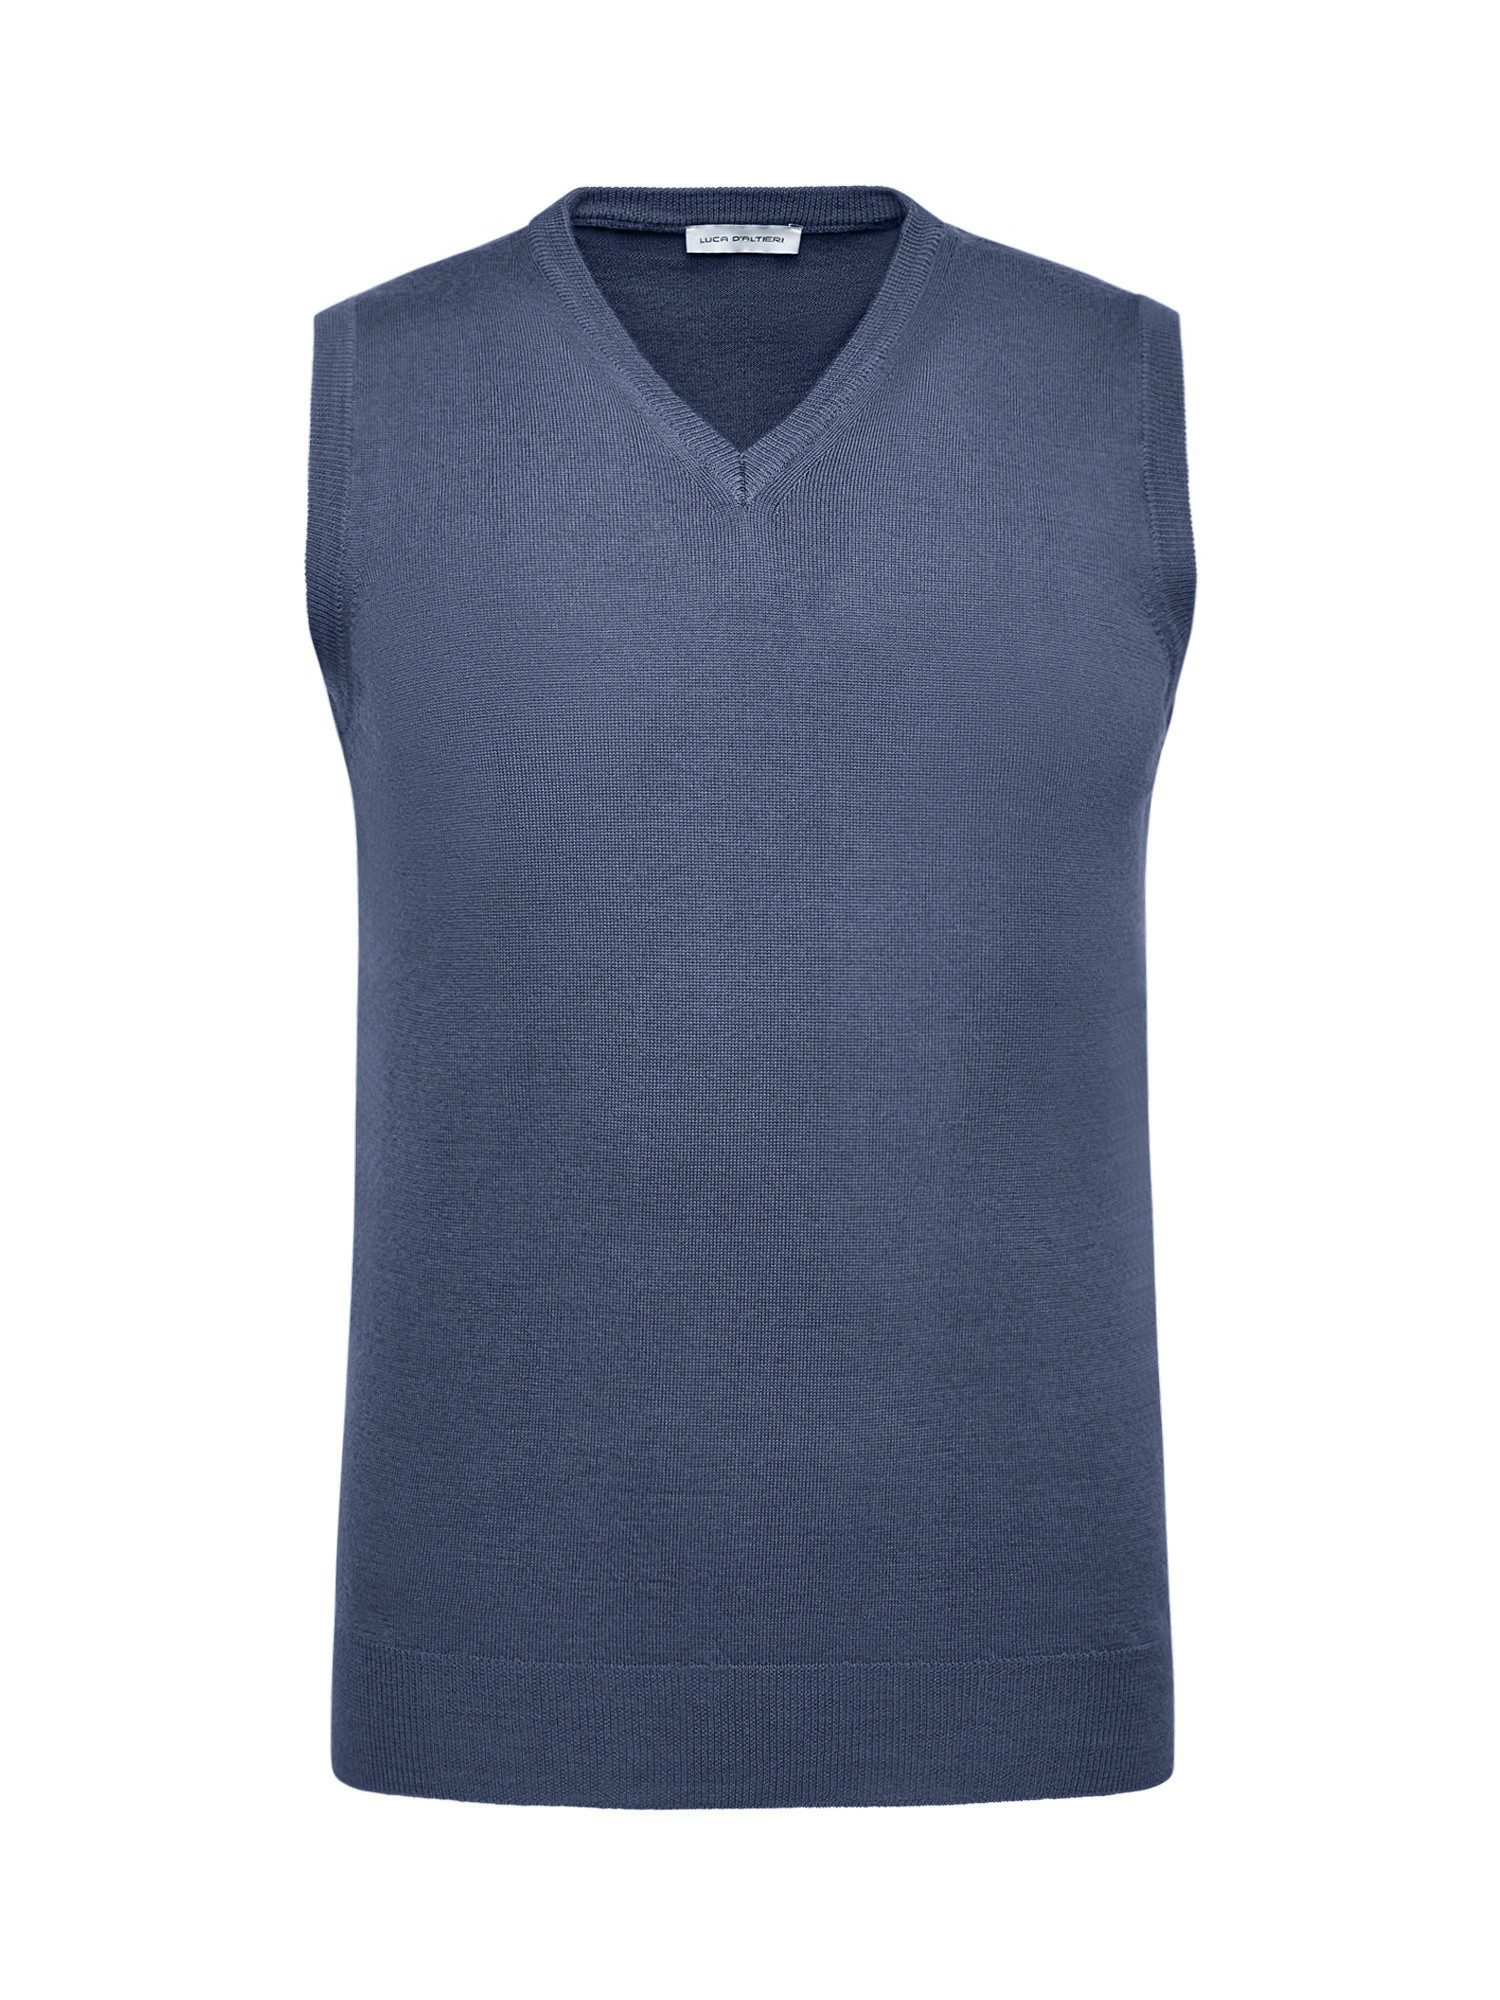 Luca D'Altieri - Merino Blend Vest - Machine Washable, Blue, large image number 0